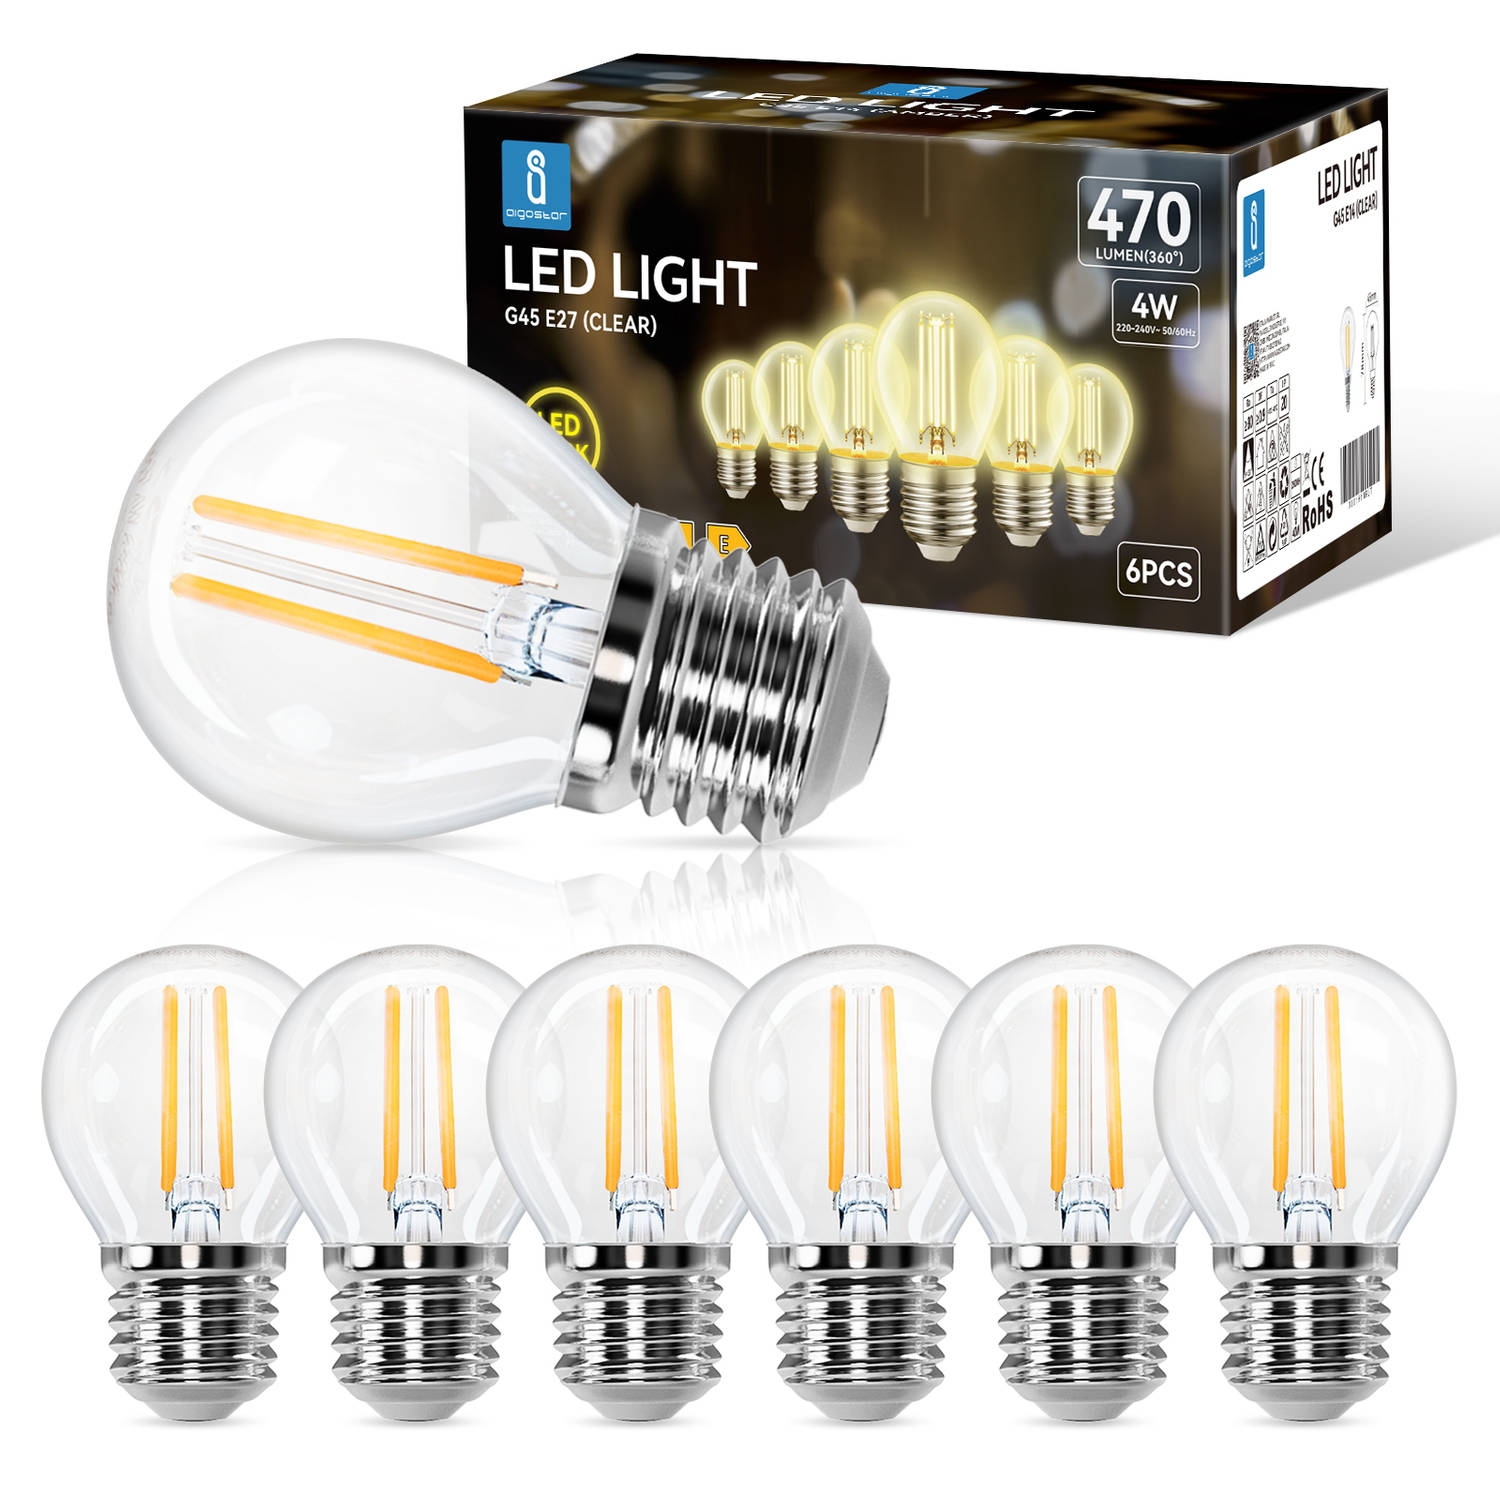 Aigostar 10zbt Led Filament Lamp E27 G45 2700k 470lm Warm Wit Licht Niet Dimbaar 4w 6 Stuks